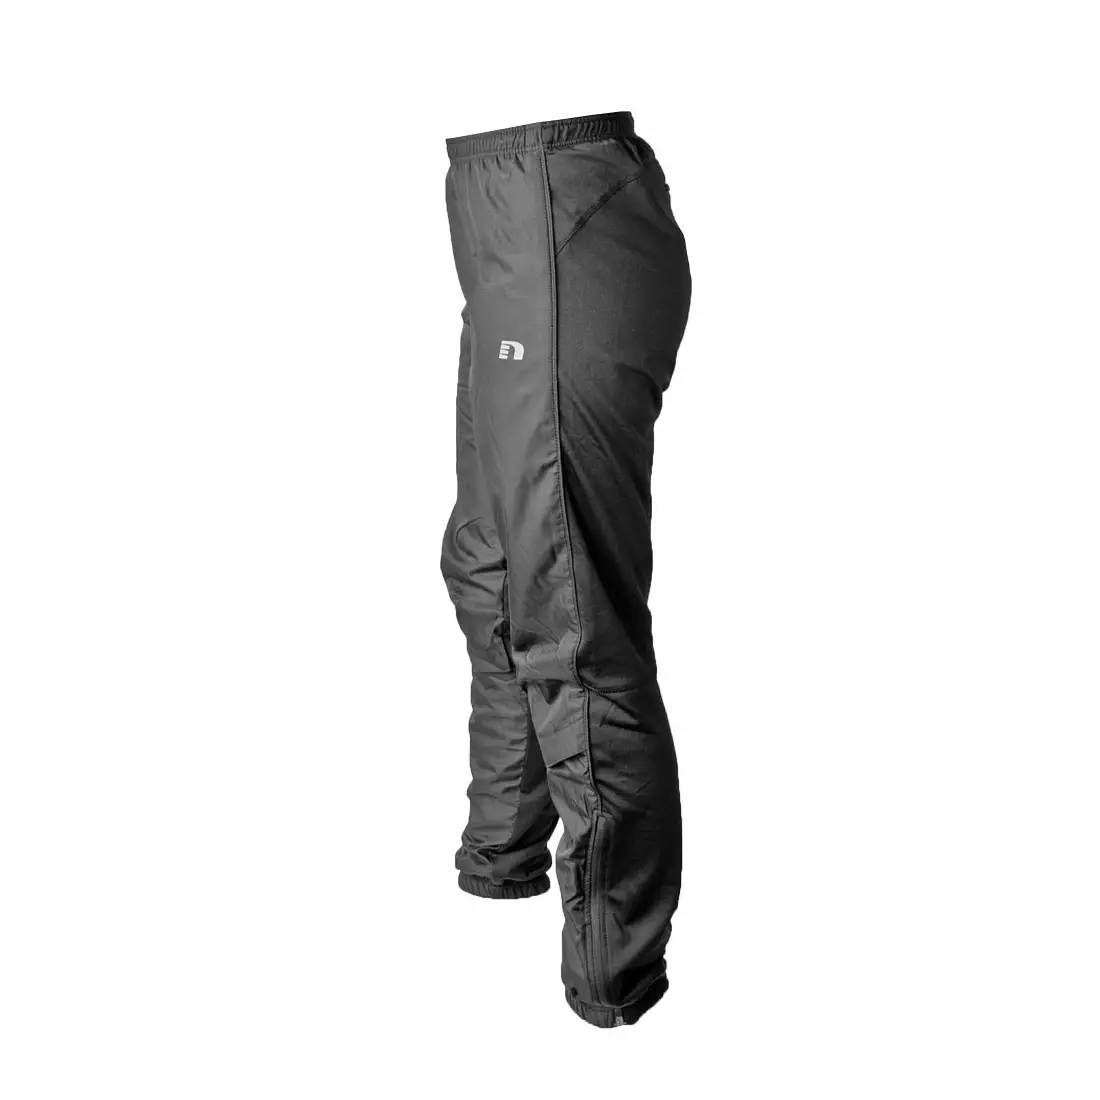 NEWLINE BASE CROSS PANTS - women's insulated running pants 13105-060